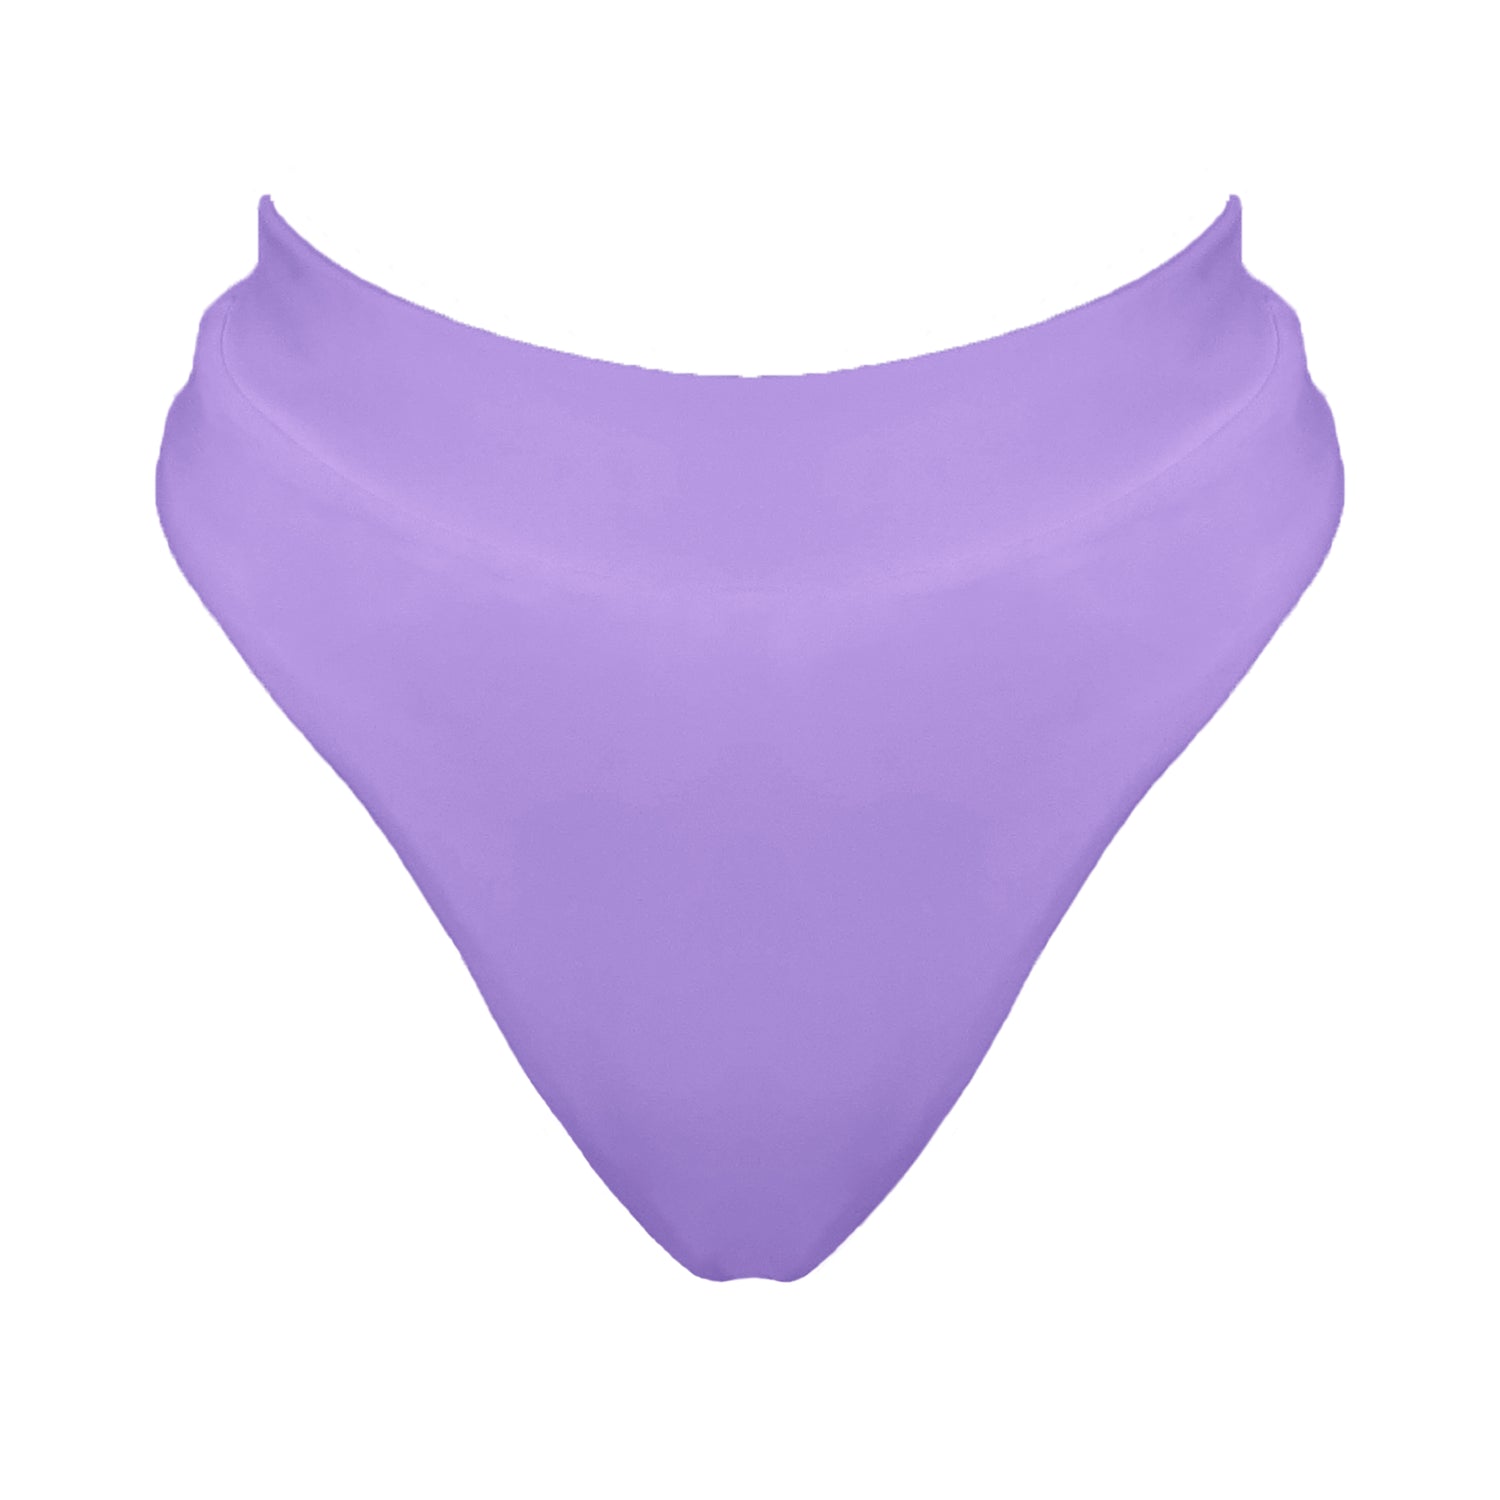 Lavender purple banded high waist full coverage bikini bottom.